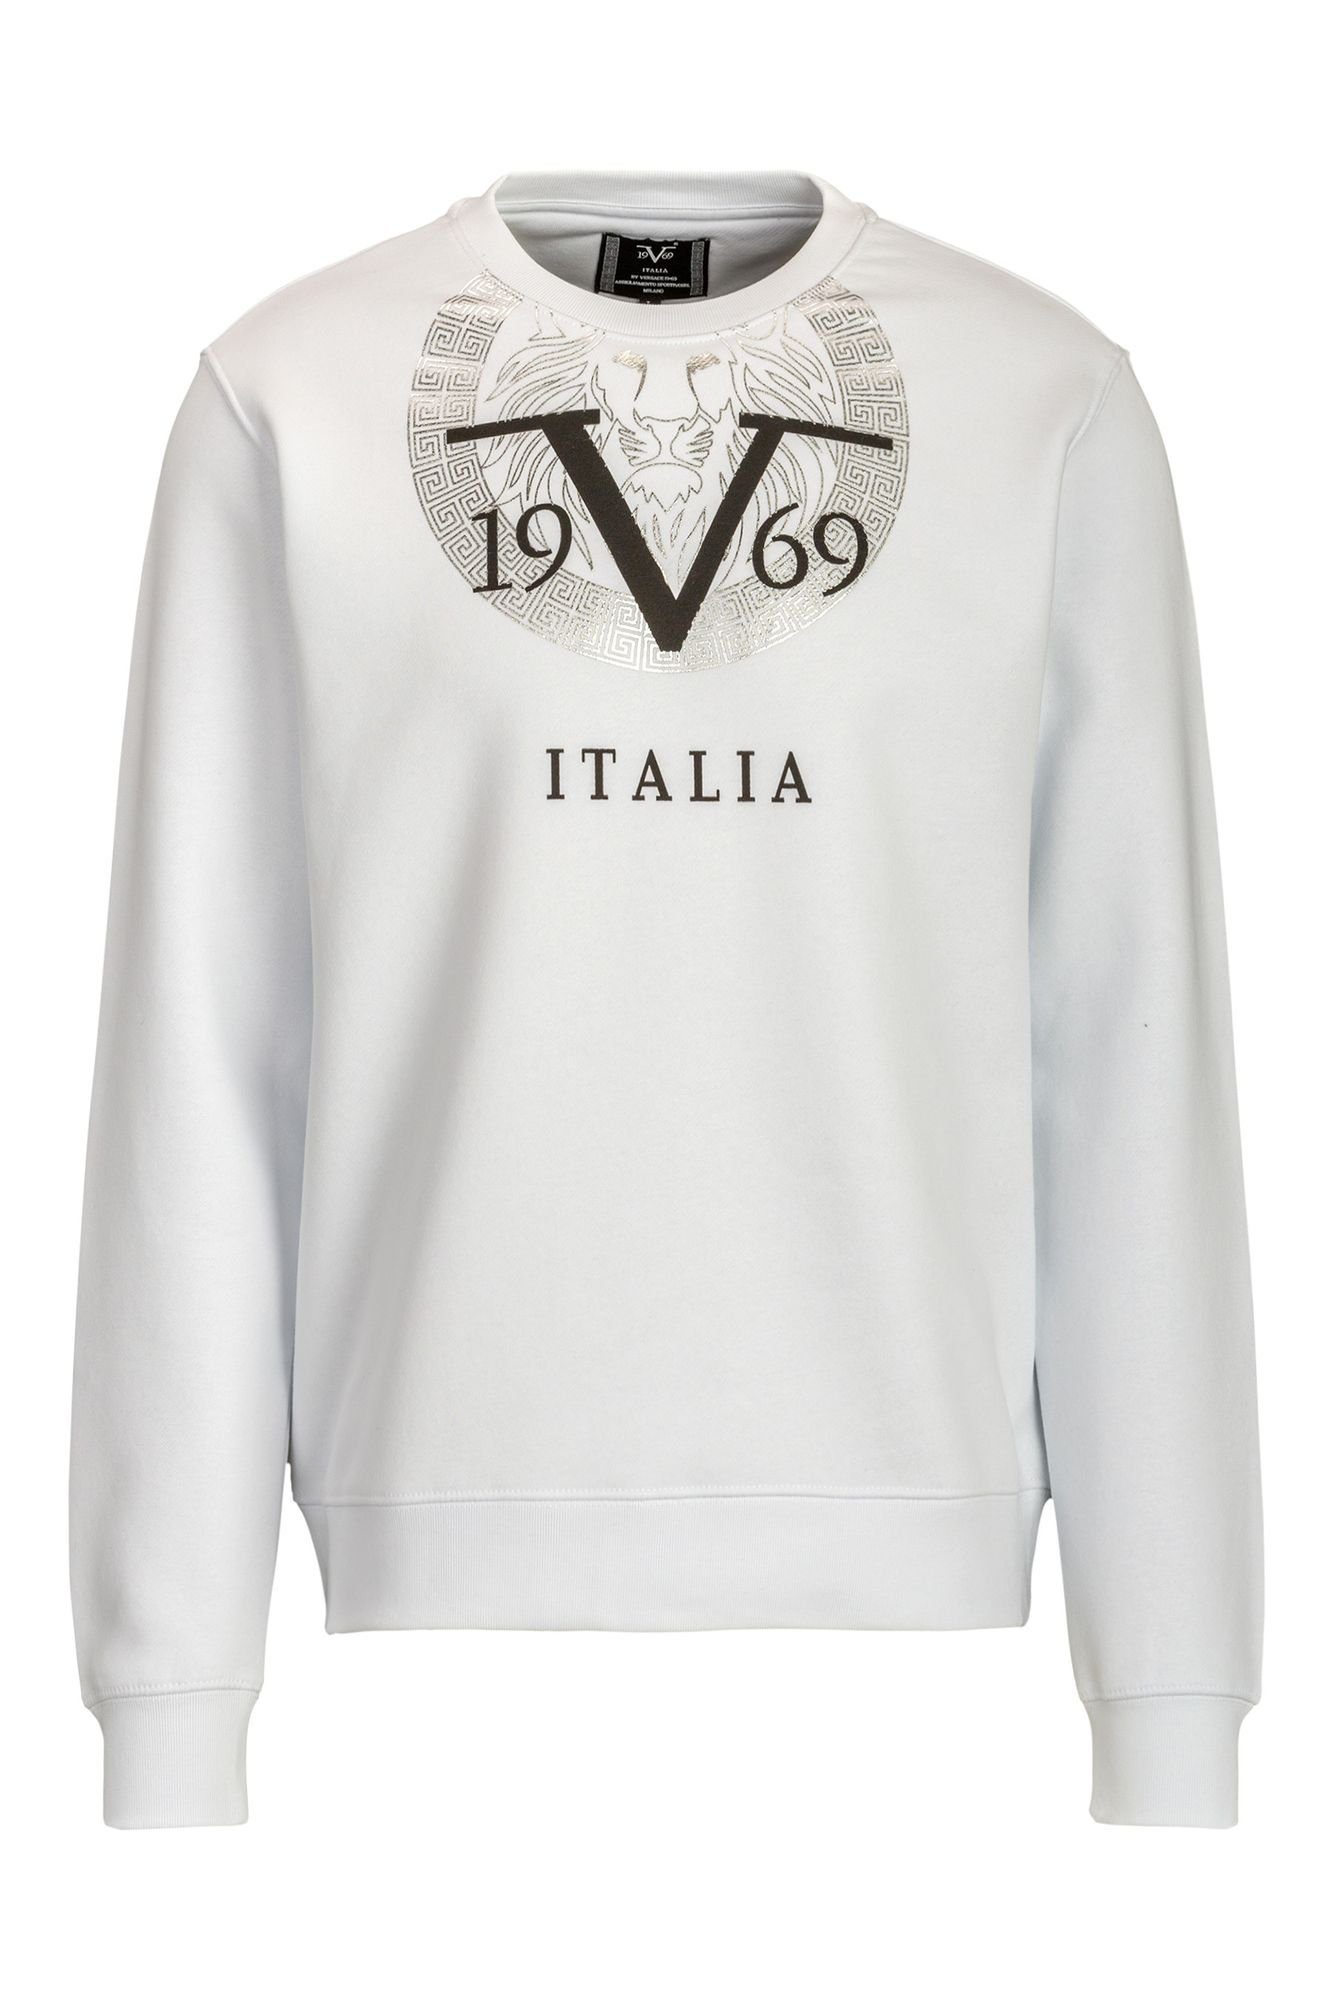 19V69 Italia by Versace Sweatshirt Brutus